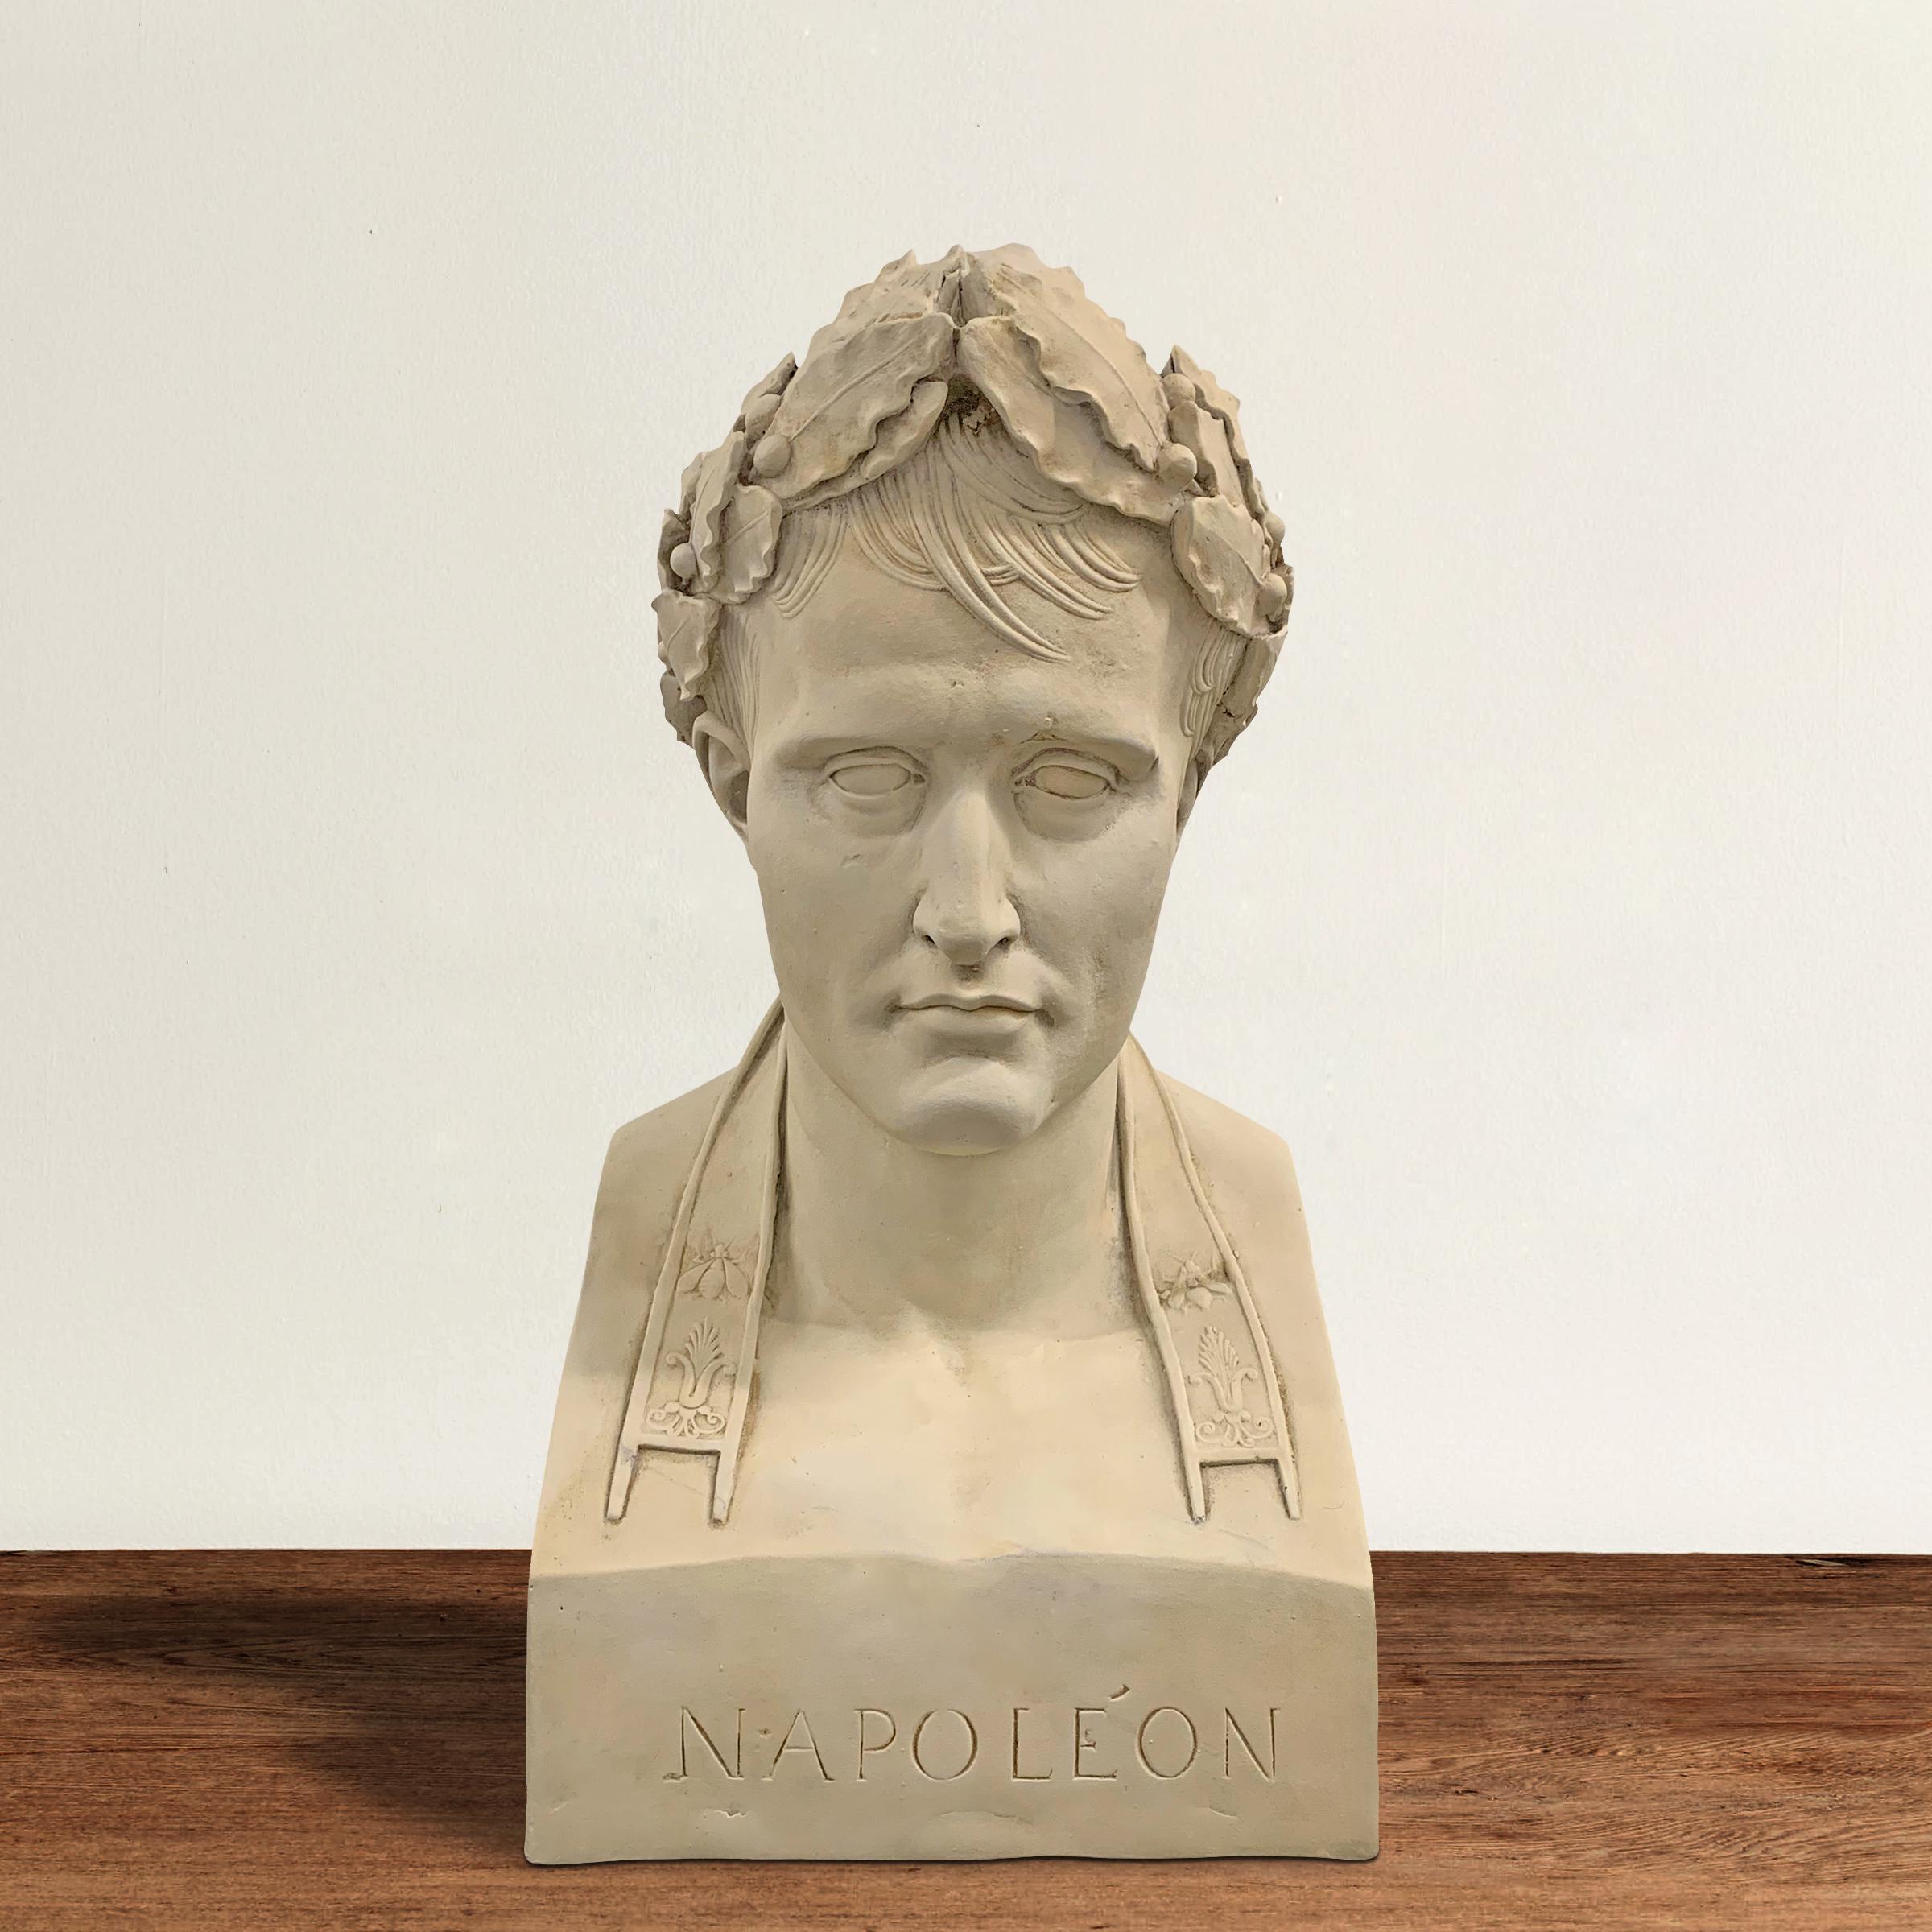 A wonderful large-scale bust of Napoléon Bonaparte cast from Antonio Canova's original portrait bust of Napoléon depicted as Caesar, 1804.